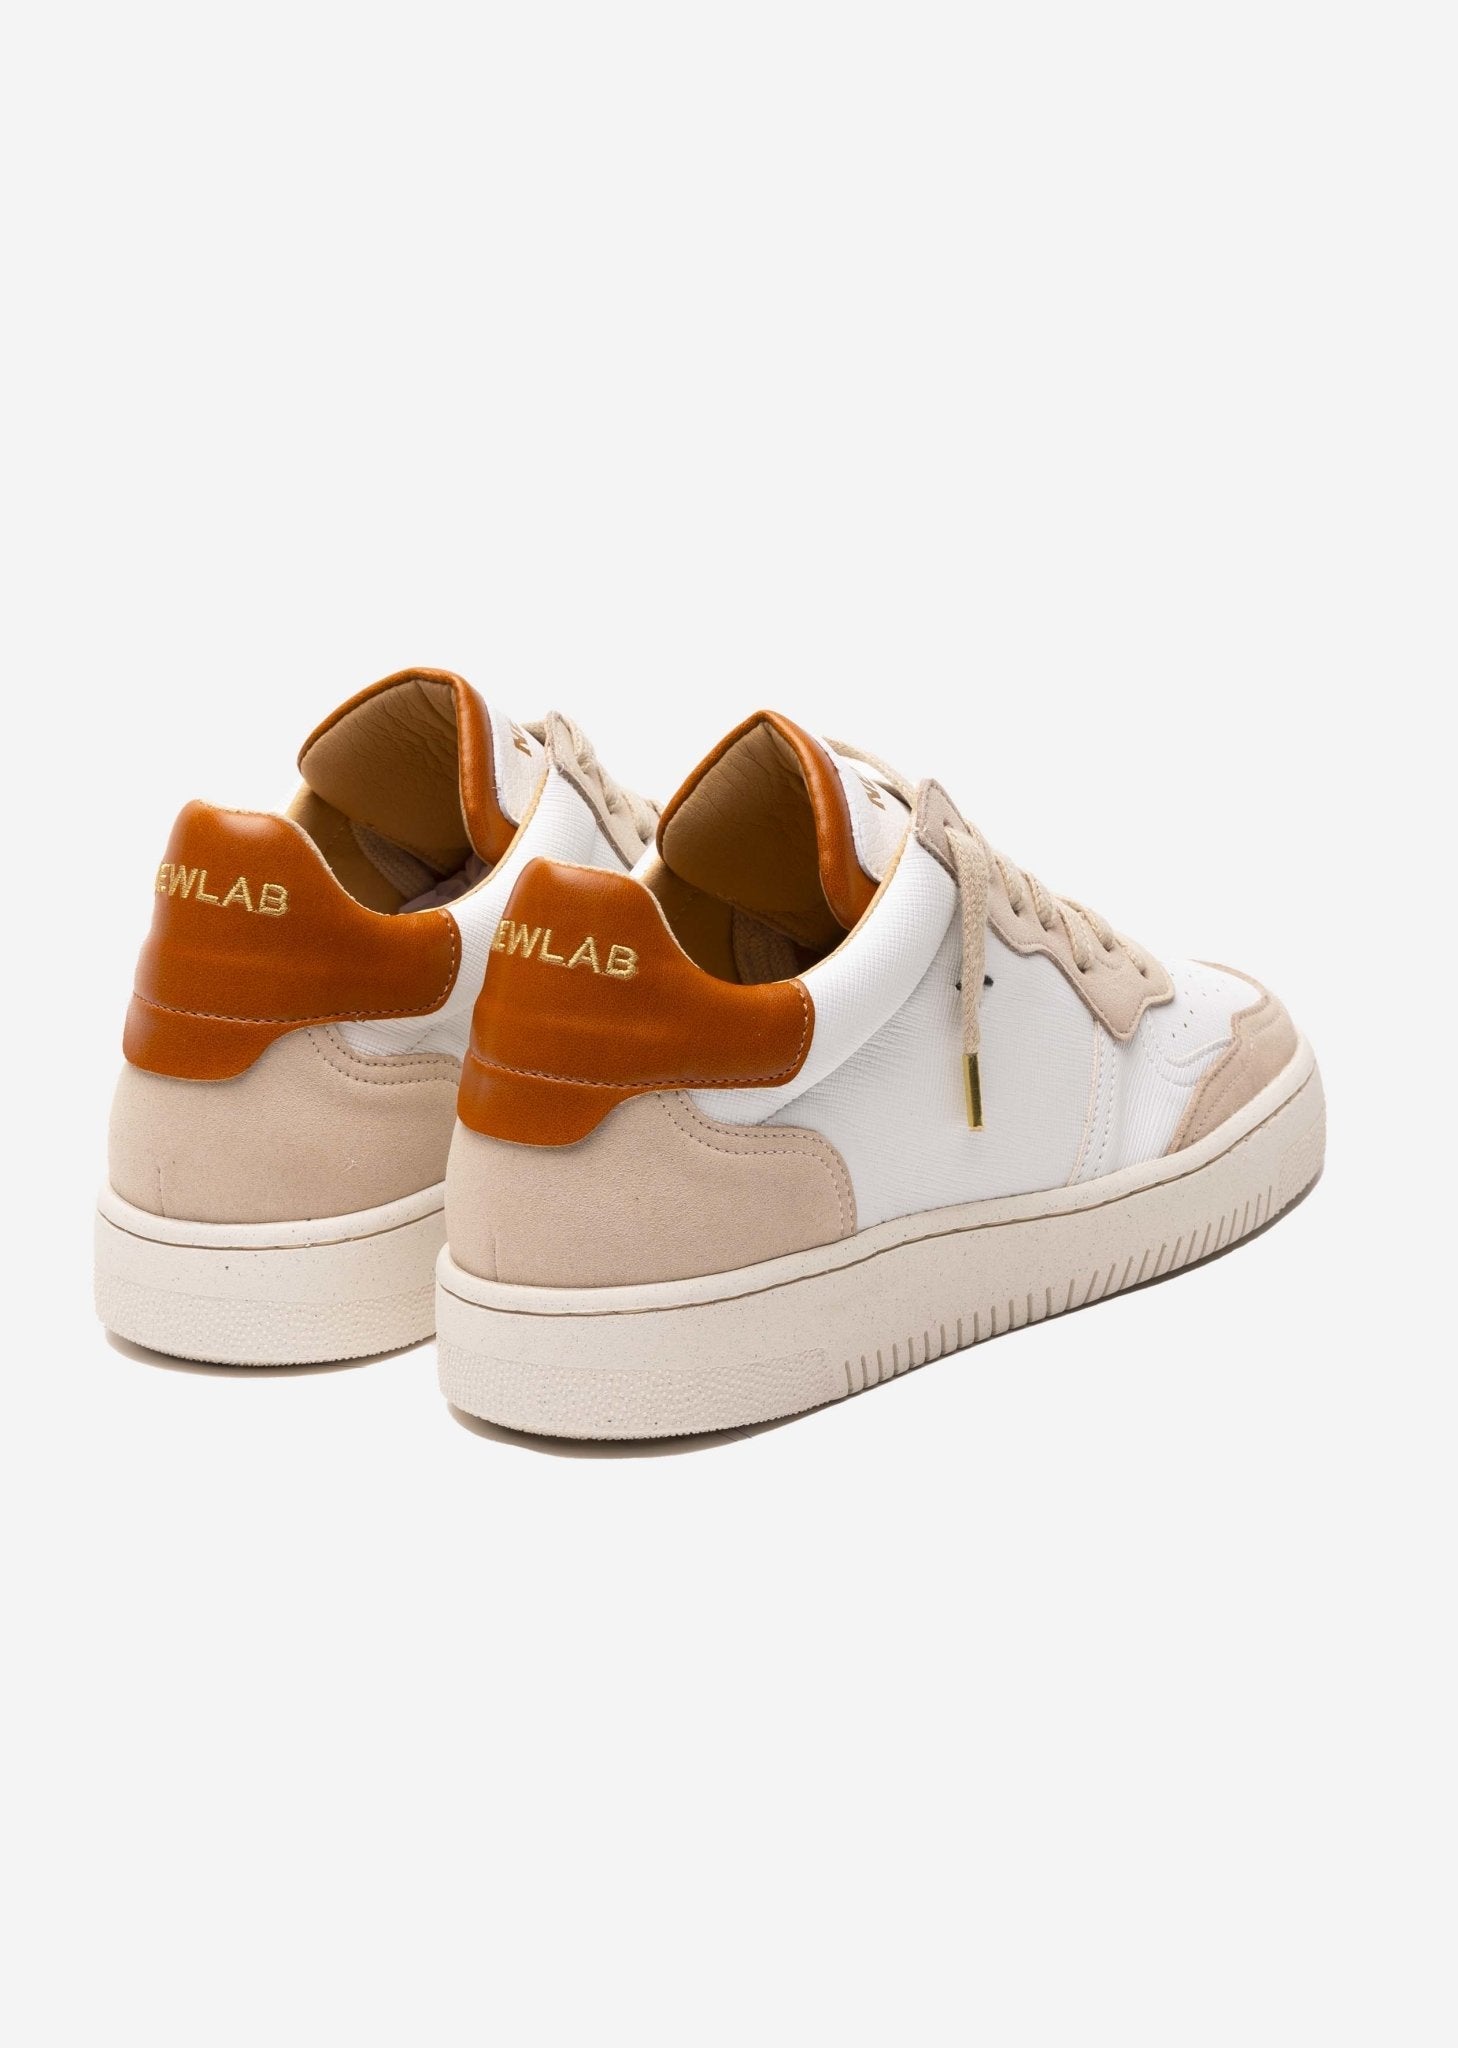 NL11 White/Brown - NEWLAB - Chaussures - NEWLAB